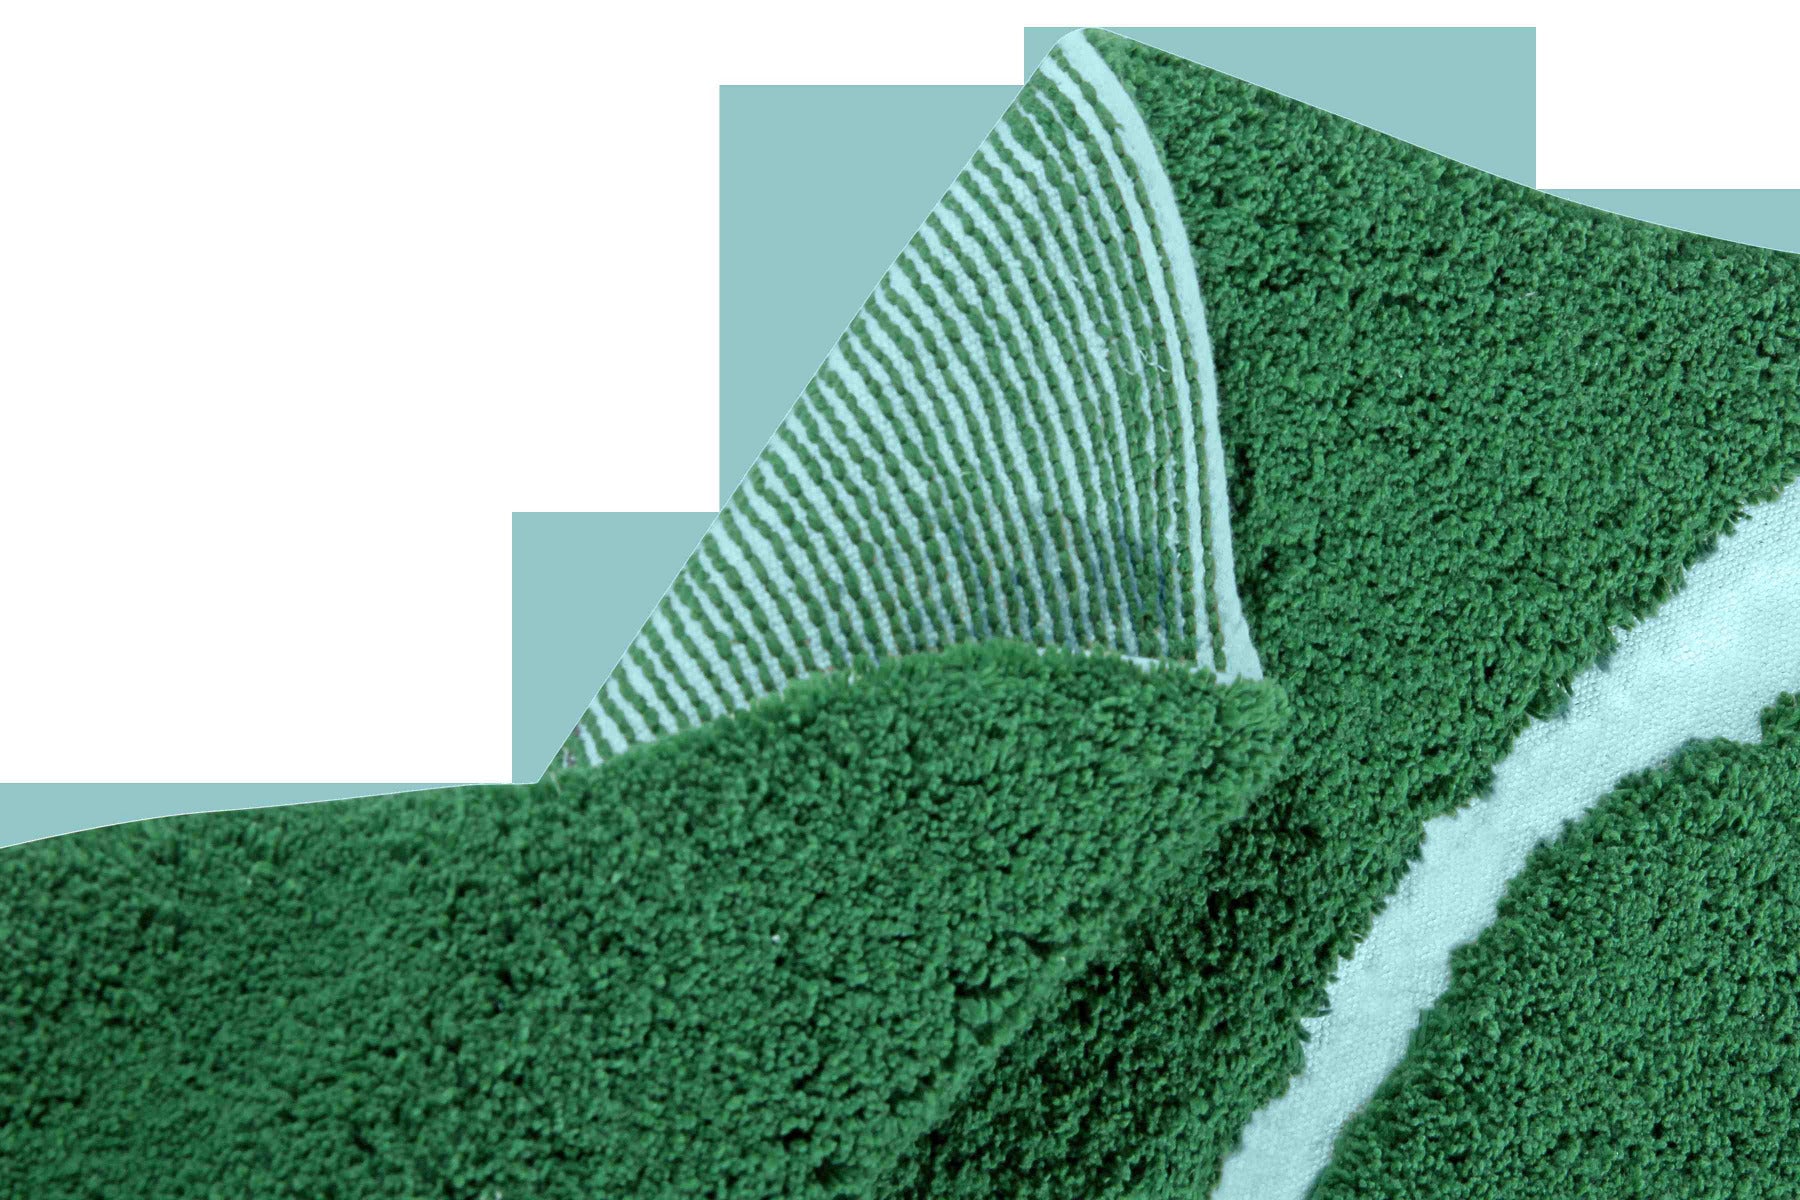 A large green leaf-shaped rug